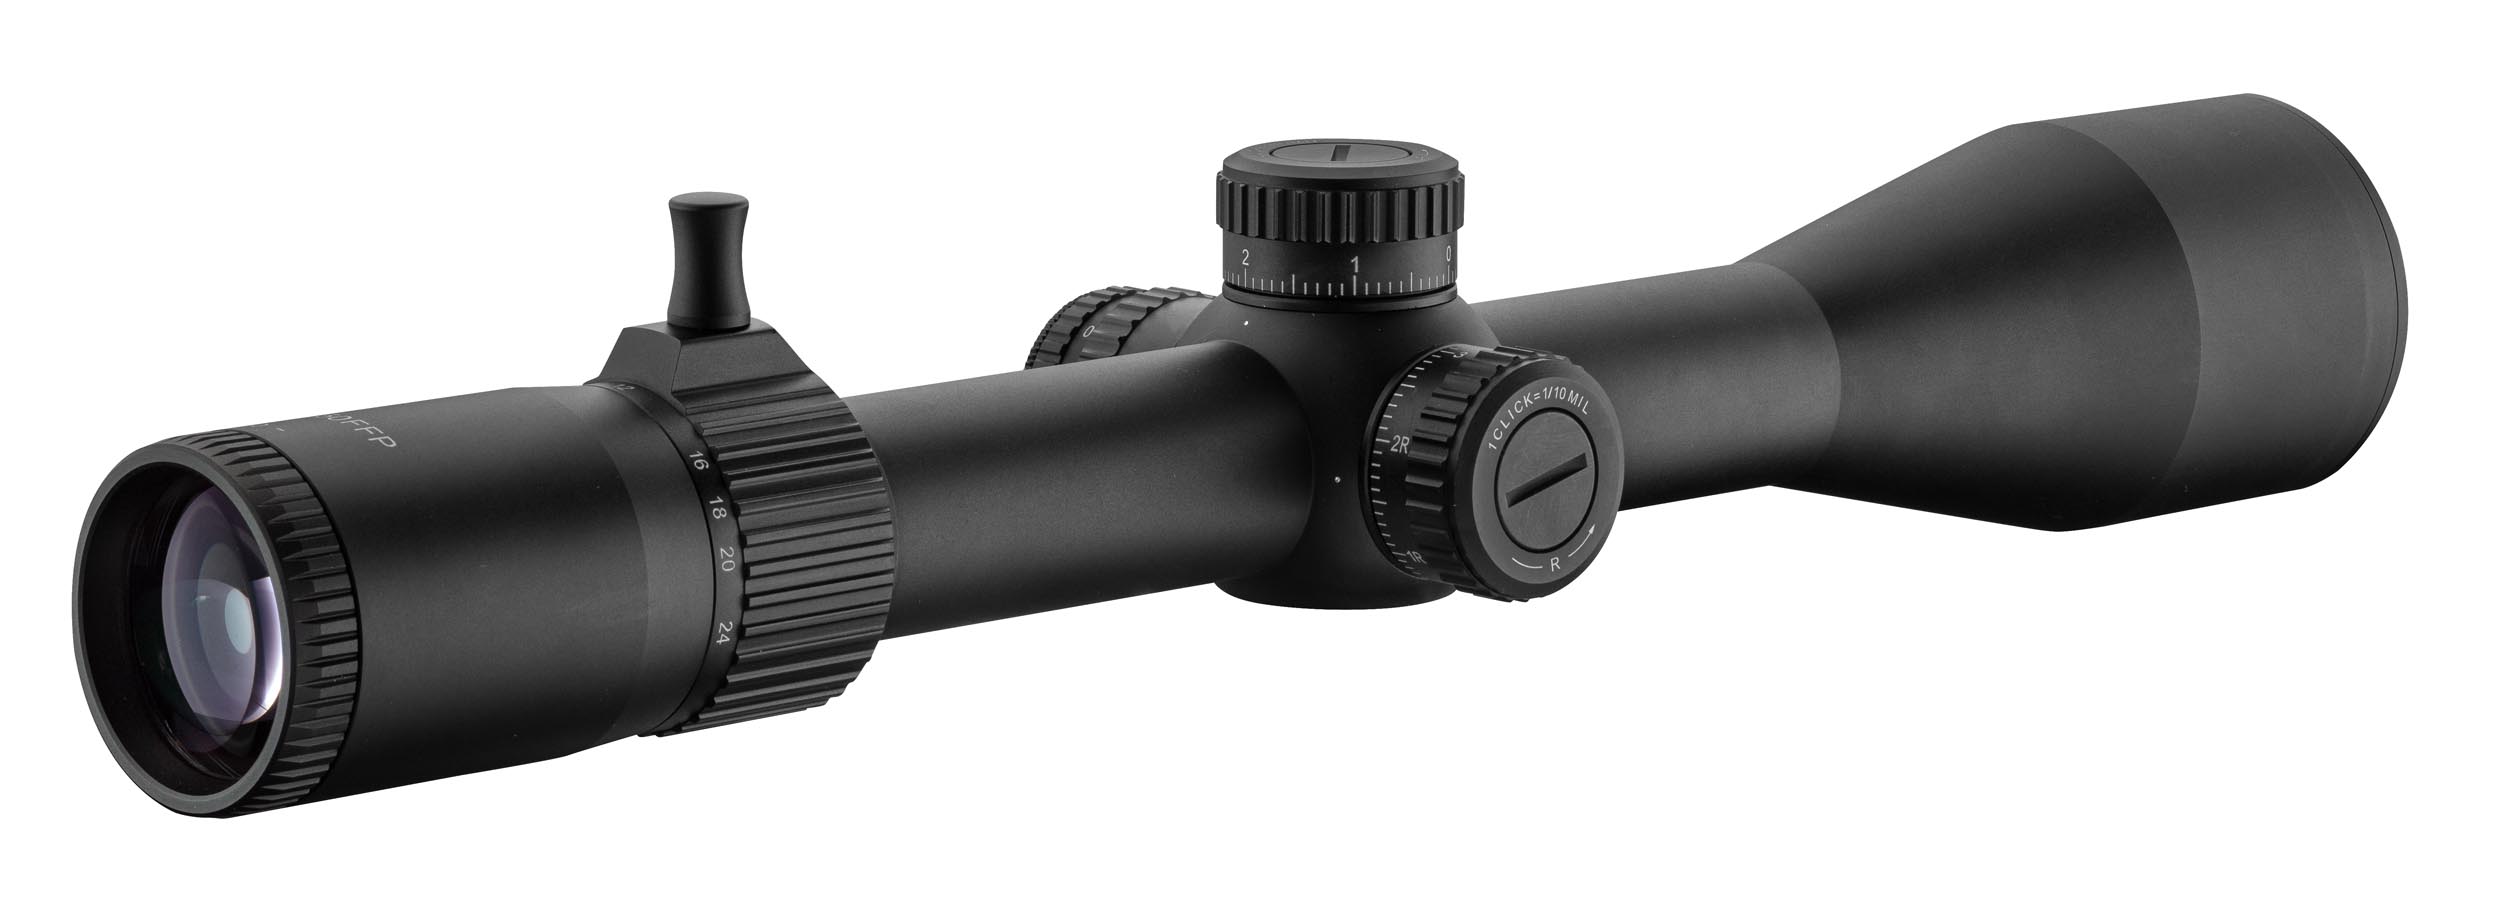 OCT6150I-4 MICRODOT 6-24x50 FFP MRAD Illuminated Riflescope